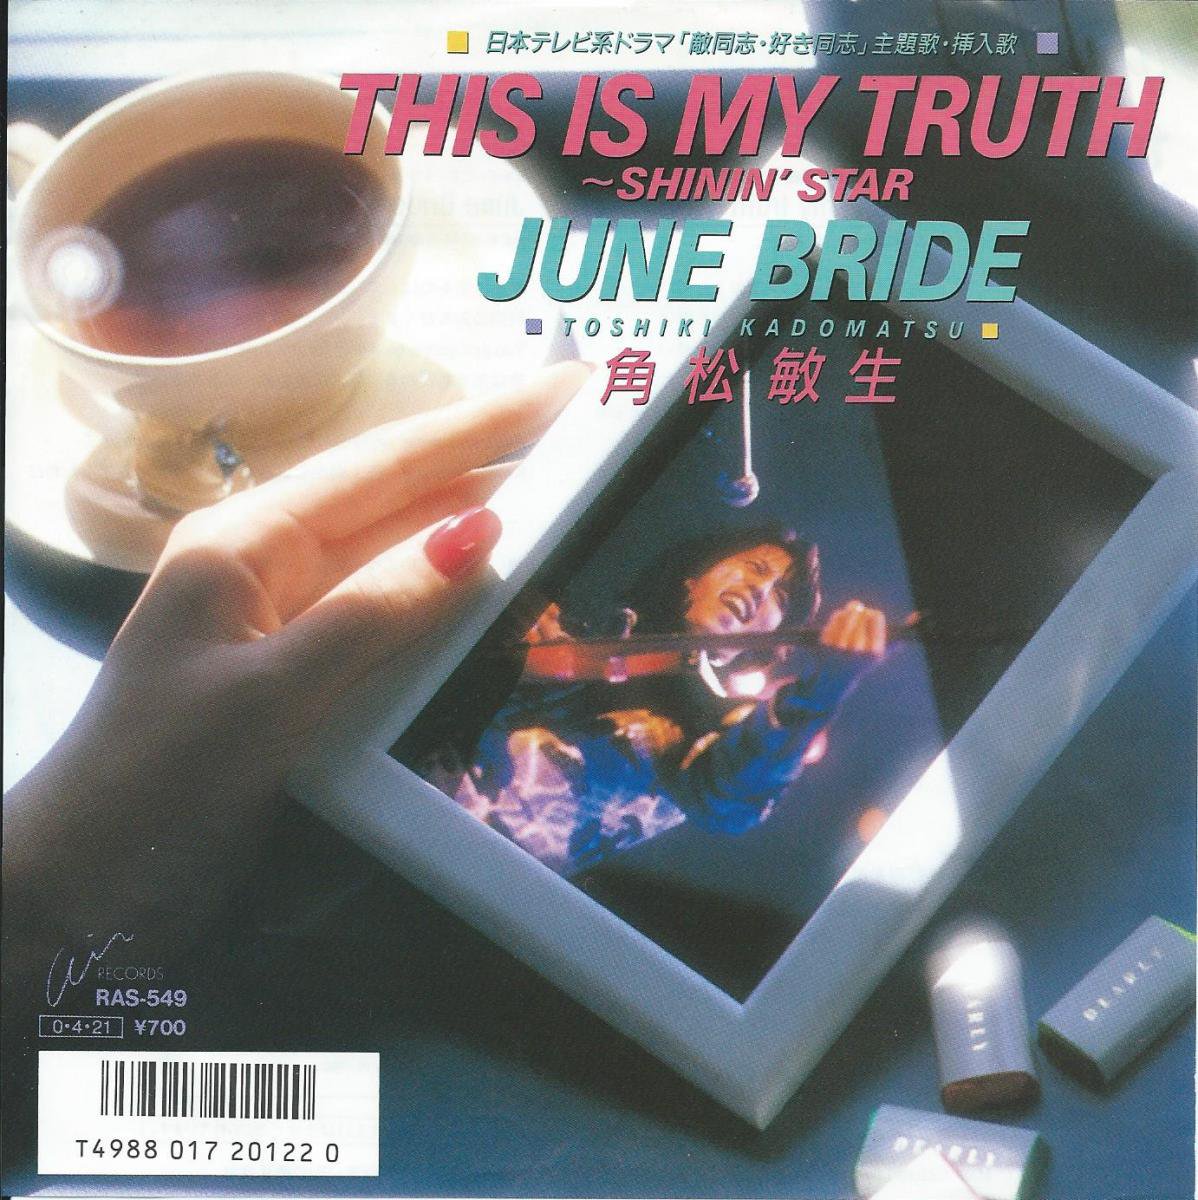 Ѿ TOSHIKI KADOMATSU / THIS IS MY TRUTH SHININ' STAR / JUNE BRIDE (7